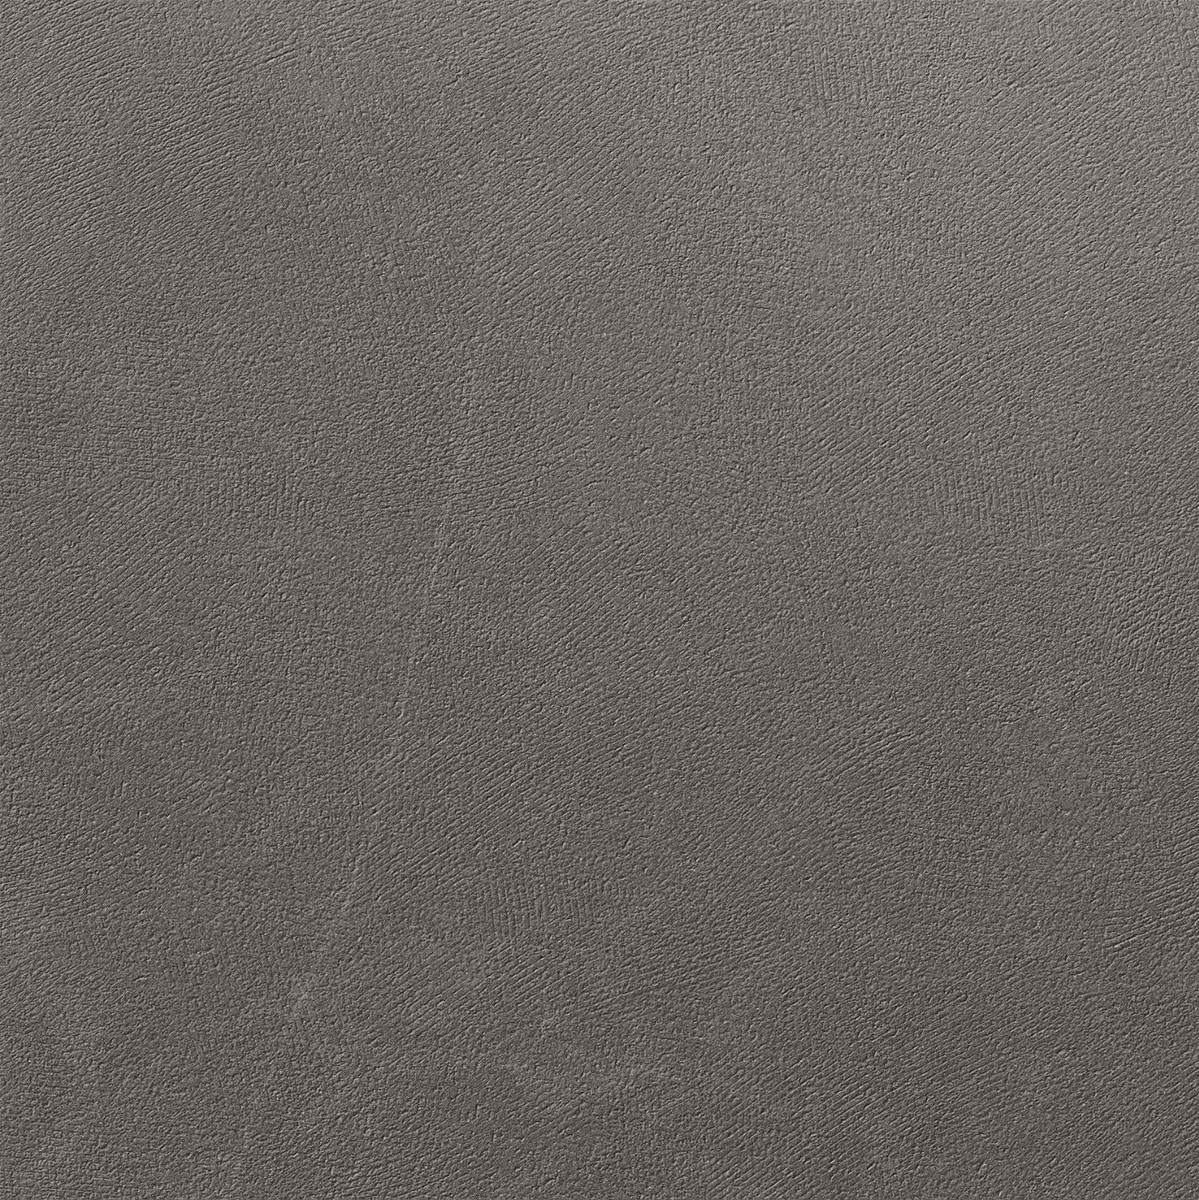 CONTACT - Carrelage Sol Antidérapant Effet pierre - Charcoal 60x60 - Réf.176112